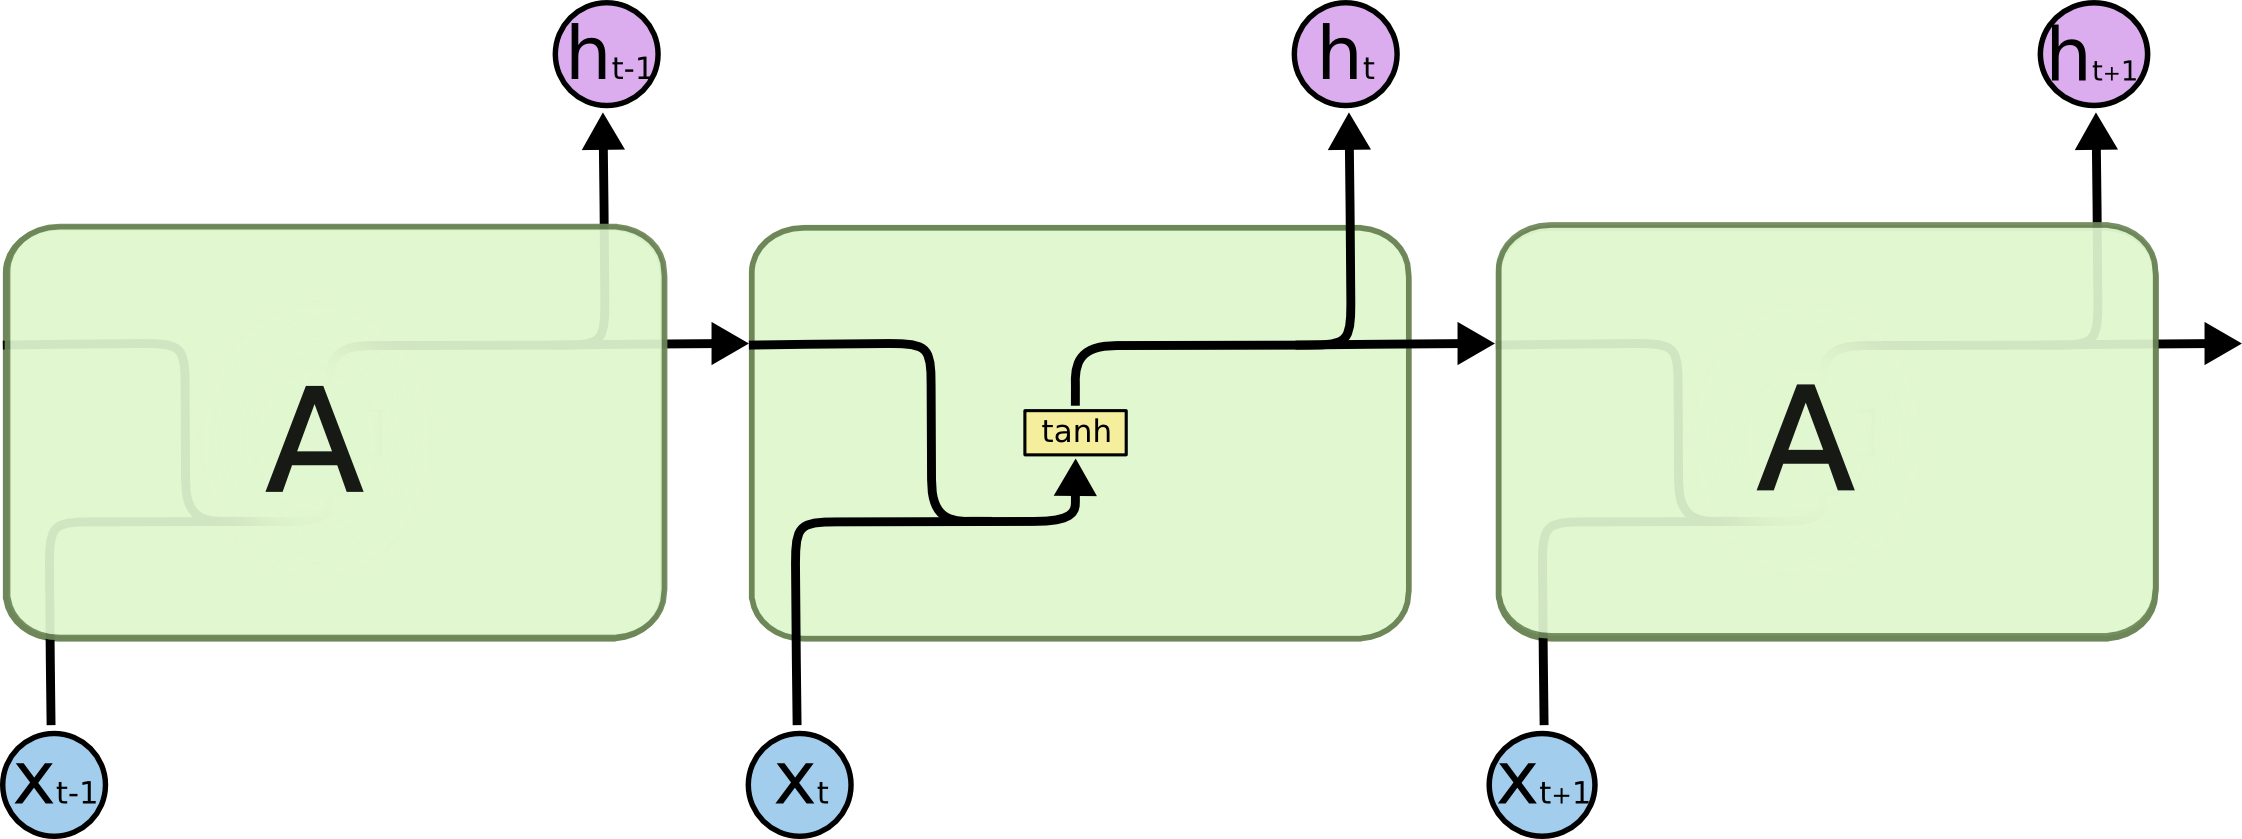 A basic recurrent neural network